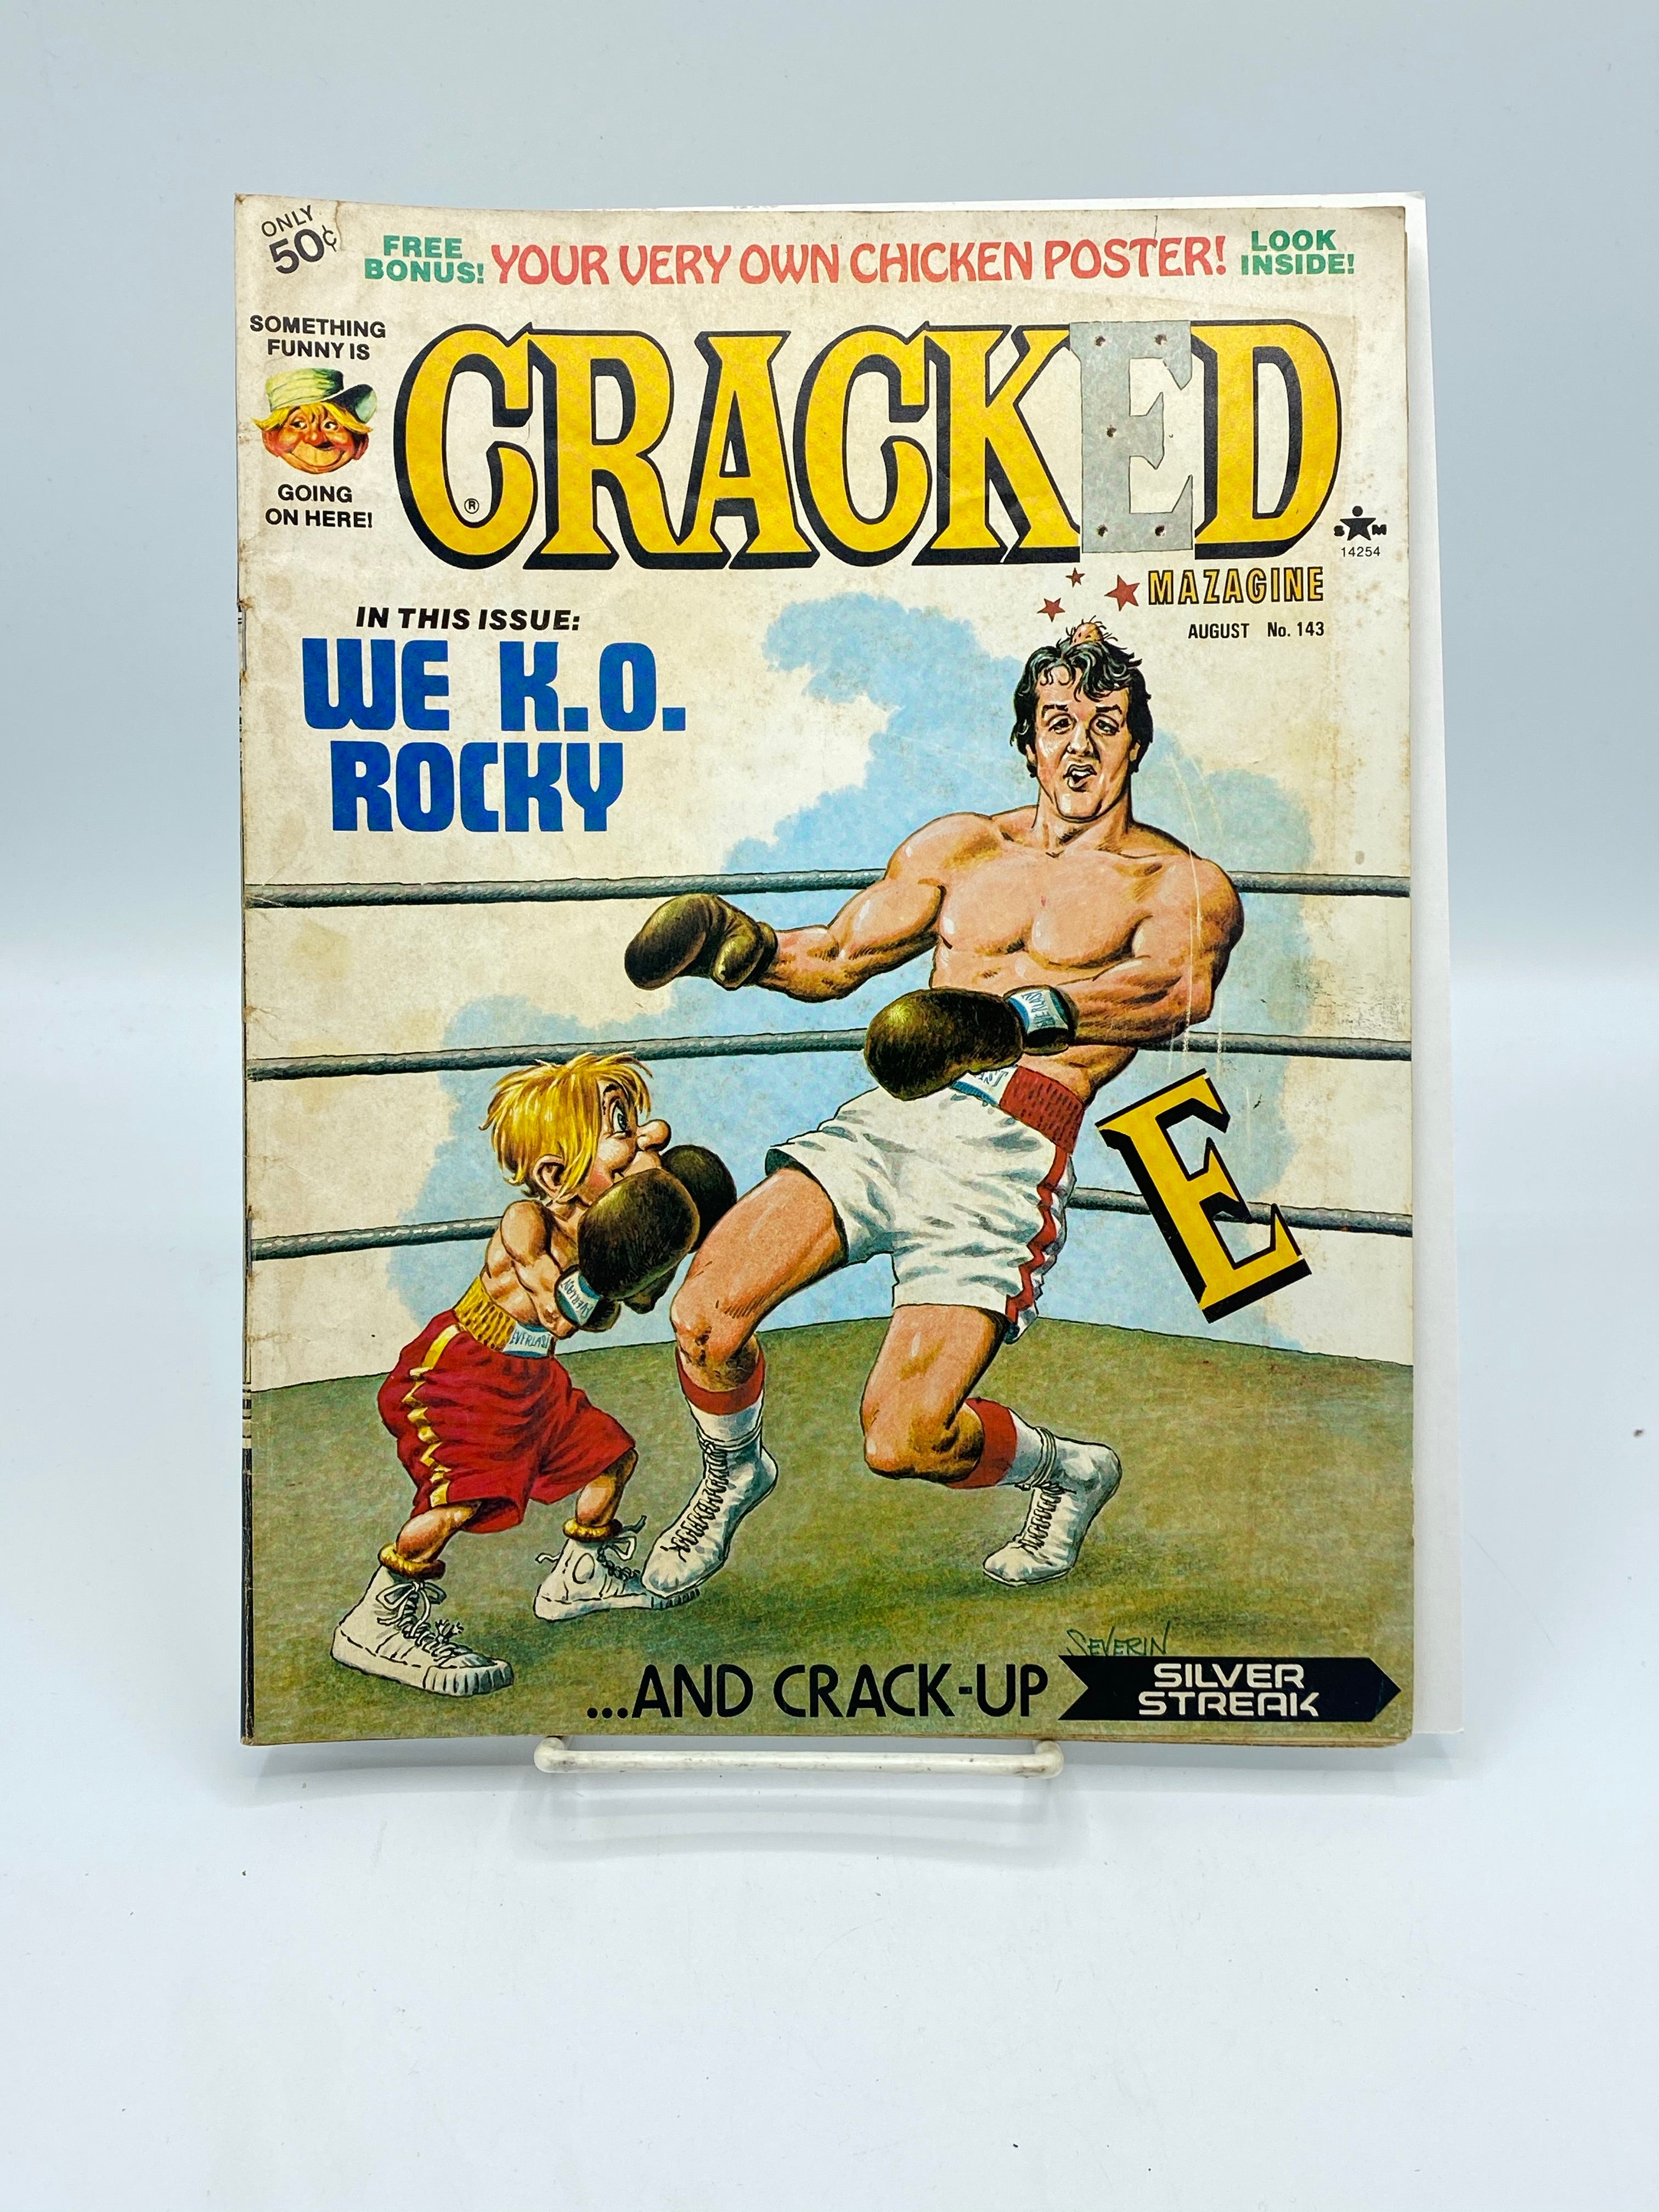 Cracked Magazine Issue No. 143 August